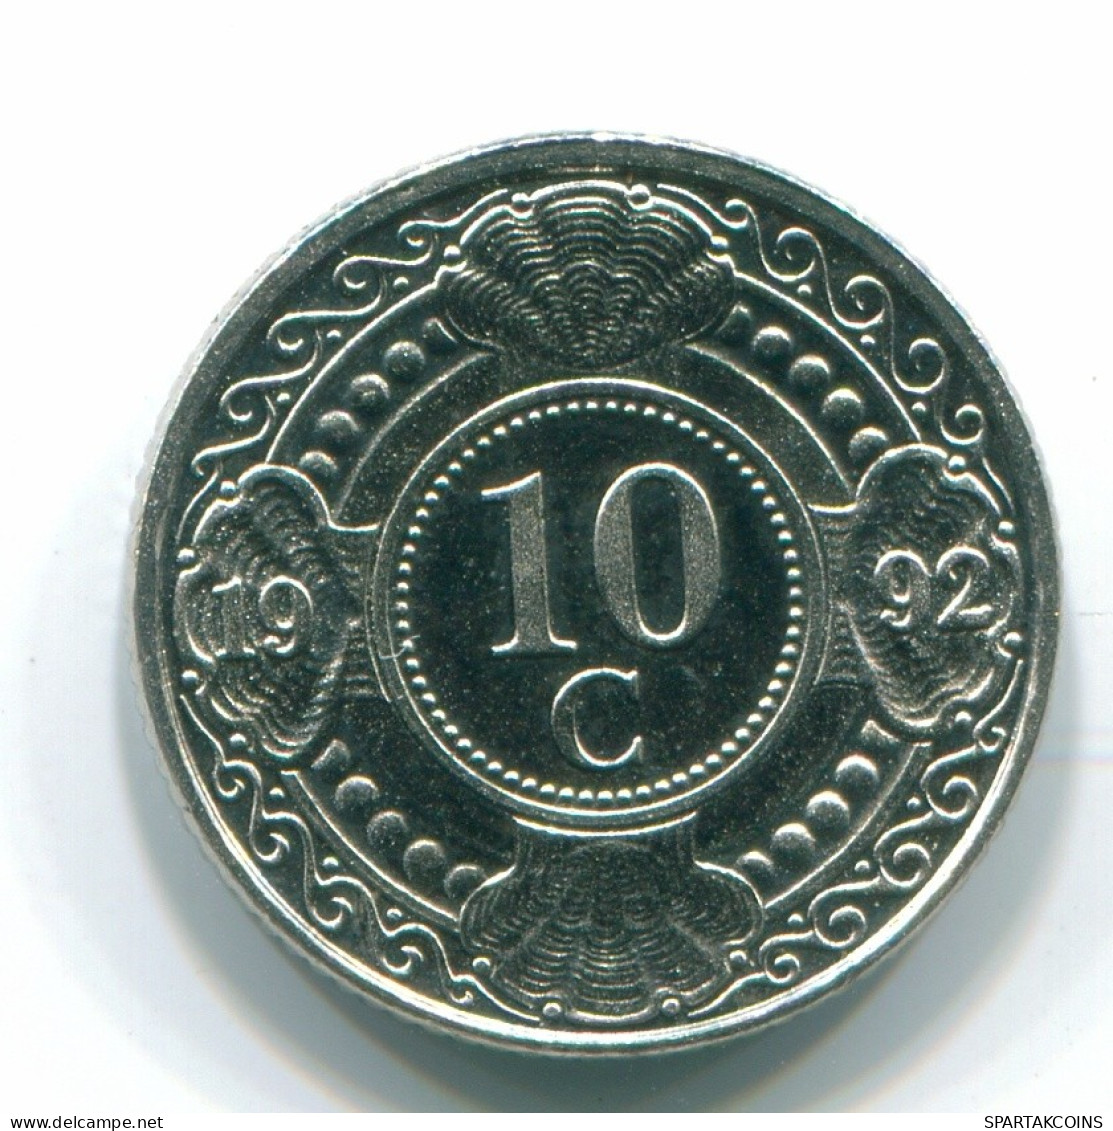 10 CENTS 1992 NETHERLANDS ANTILLES Nickel Colonial Coin #S11356.U.A - Nederlandse Antillen